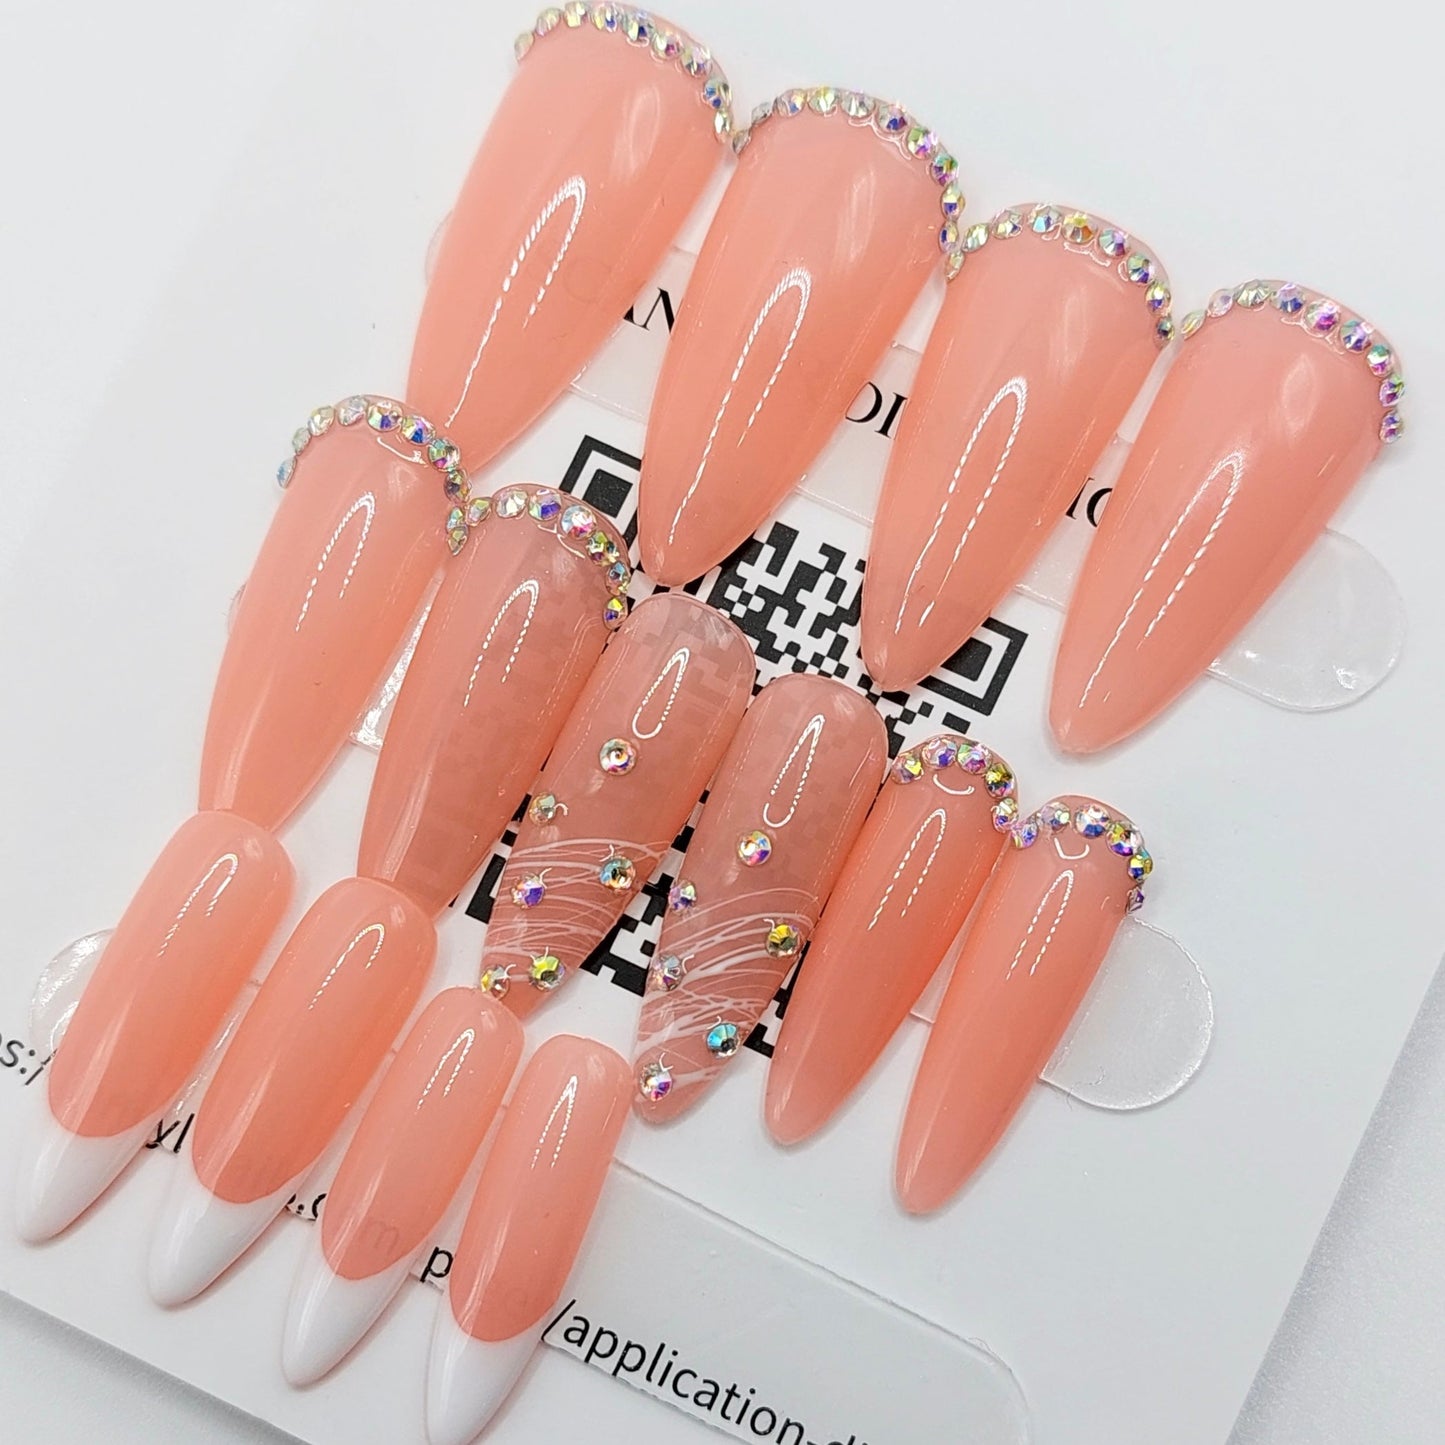 Pink Jelly Crystal Gem Nails (24pcs) - Medium Stiletto